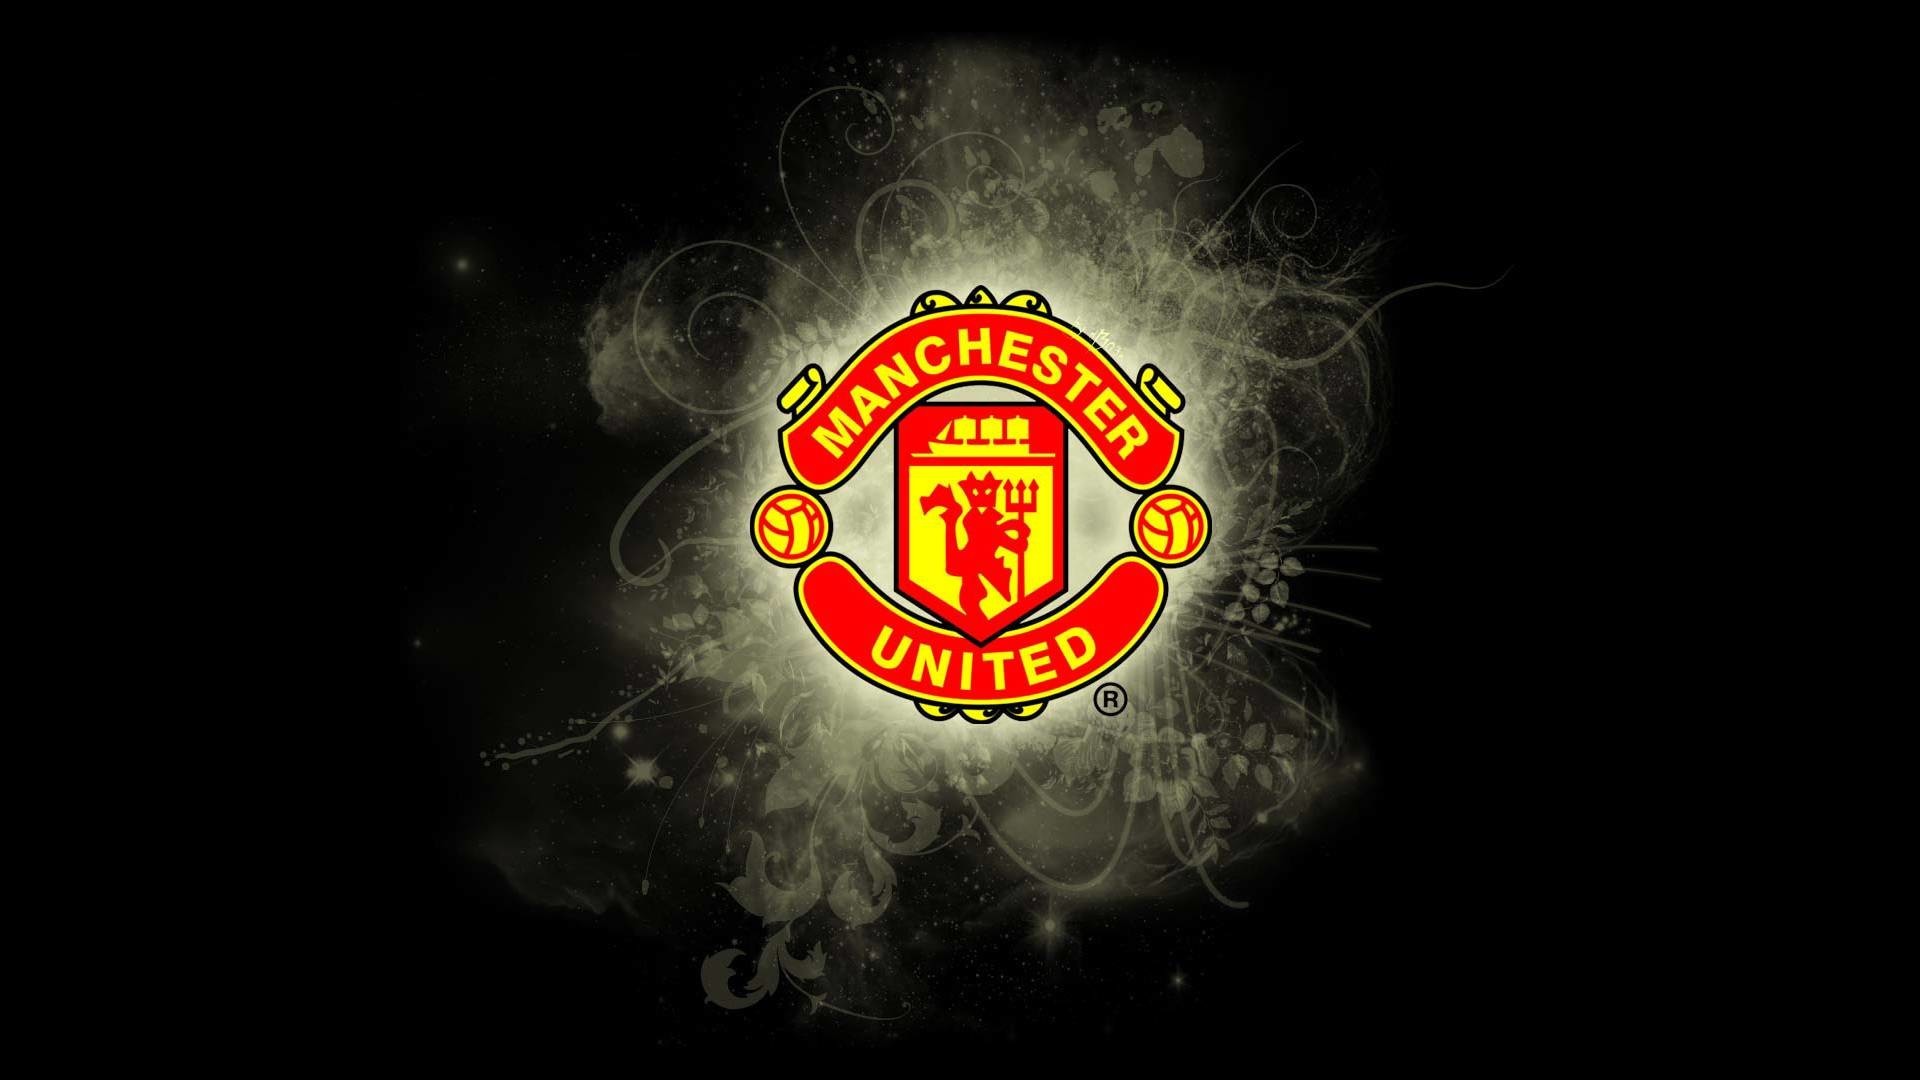 Manchester United Logo Wallpapers Hd Wallpaper 1920x1080 1920x1080